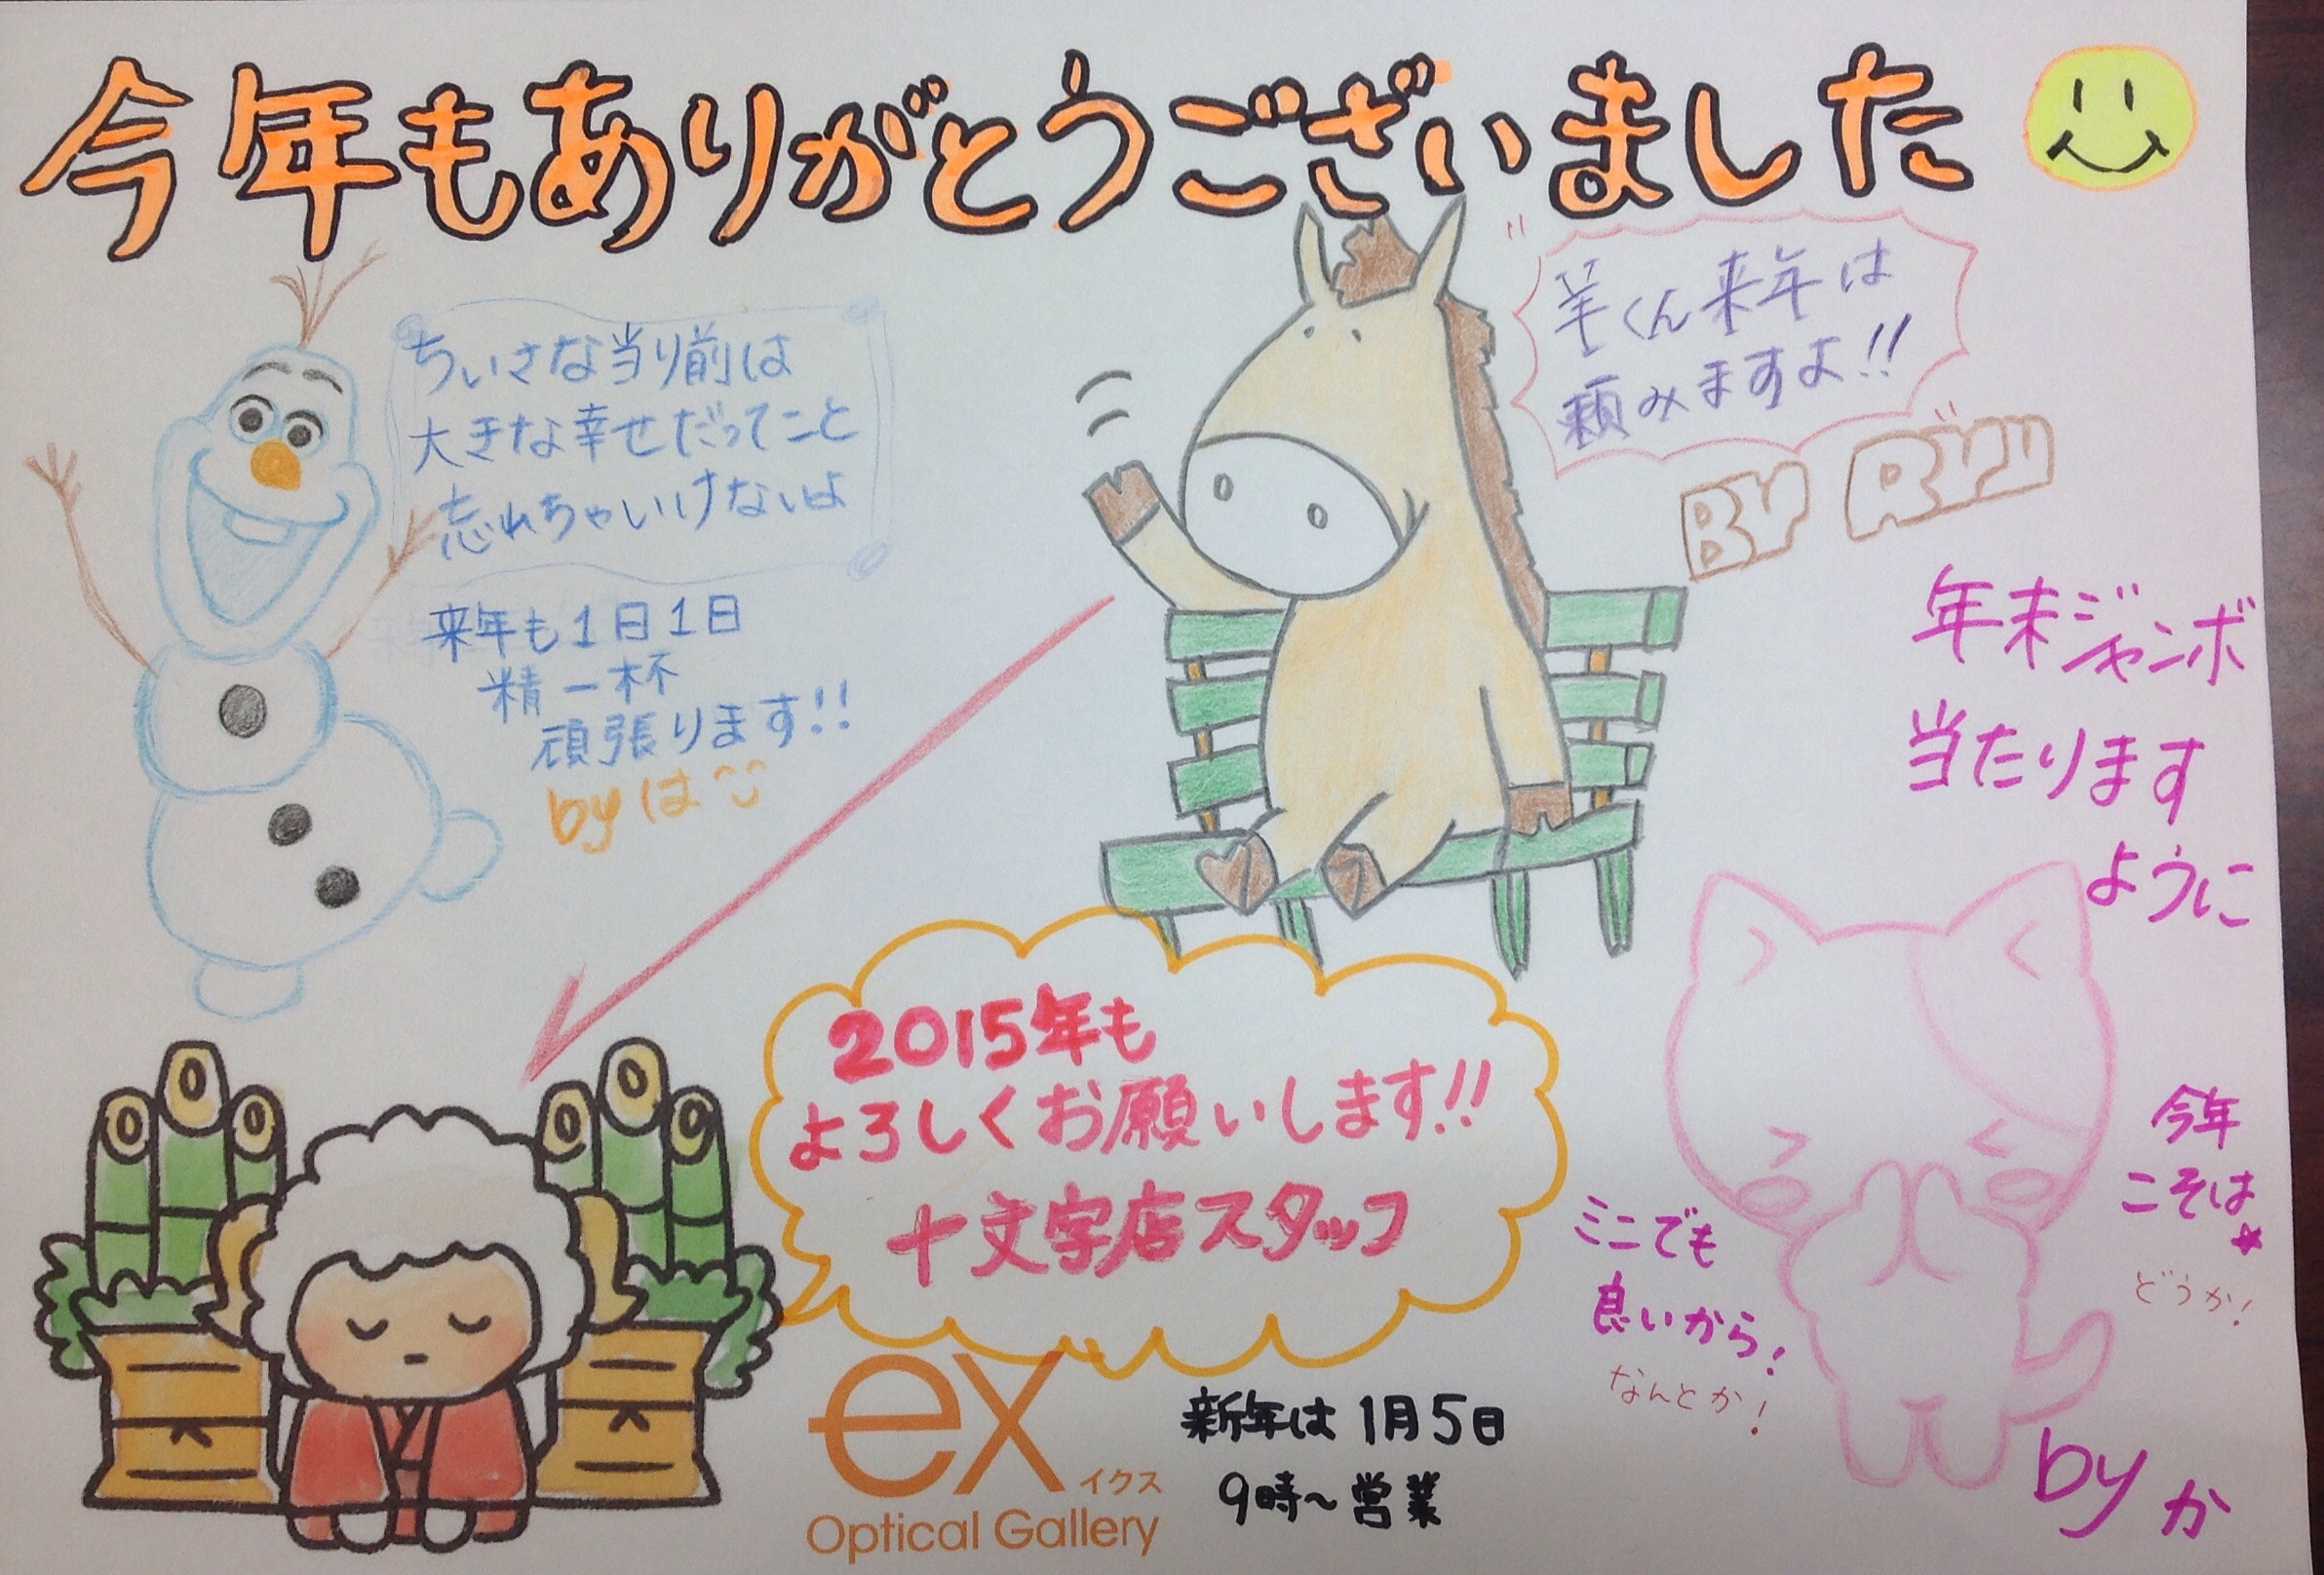 http://www.root-ex.co.jp/jumonji/2014/12/29/1/image.jpg